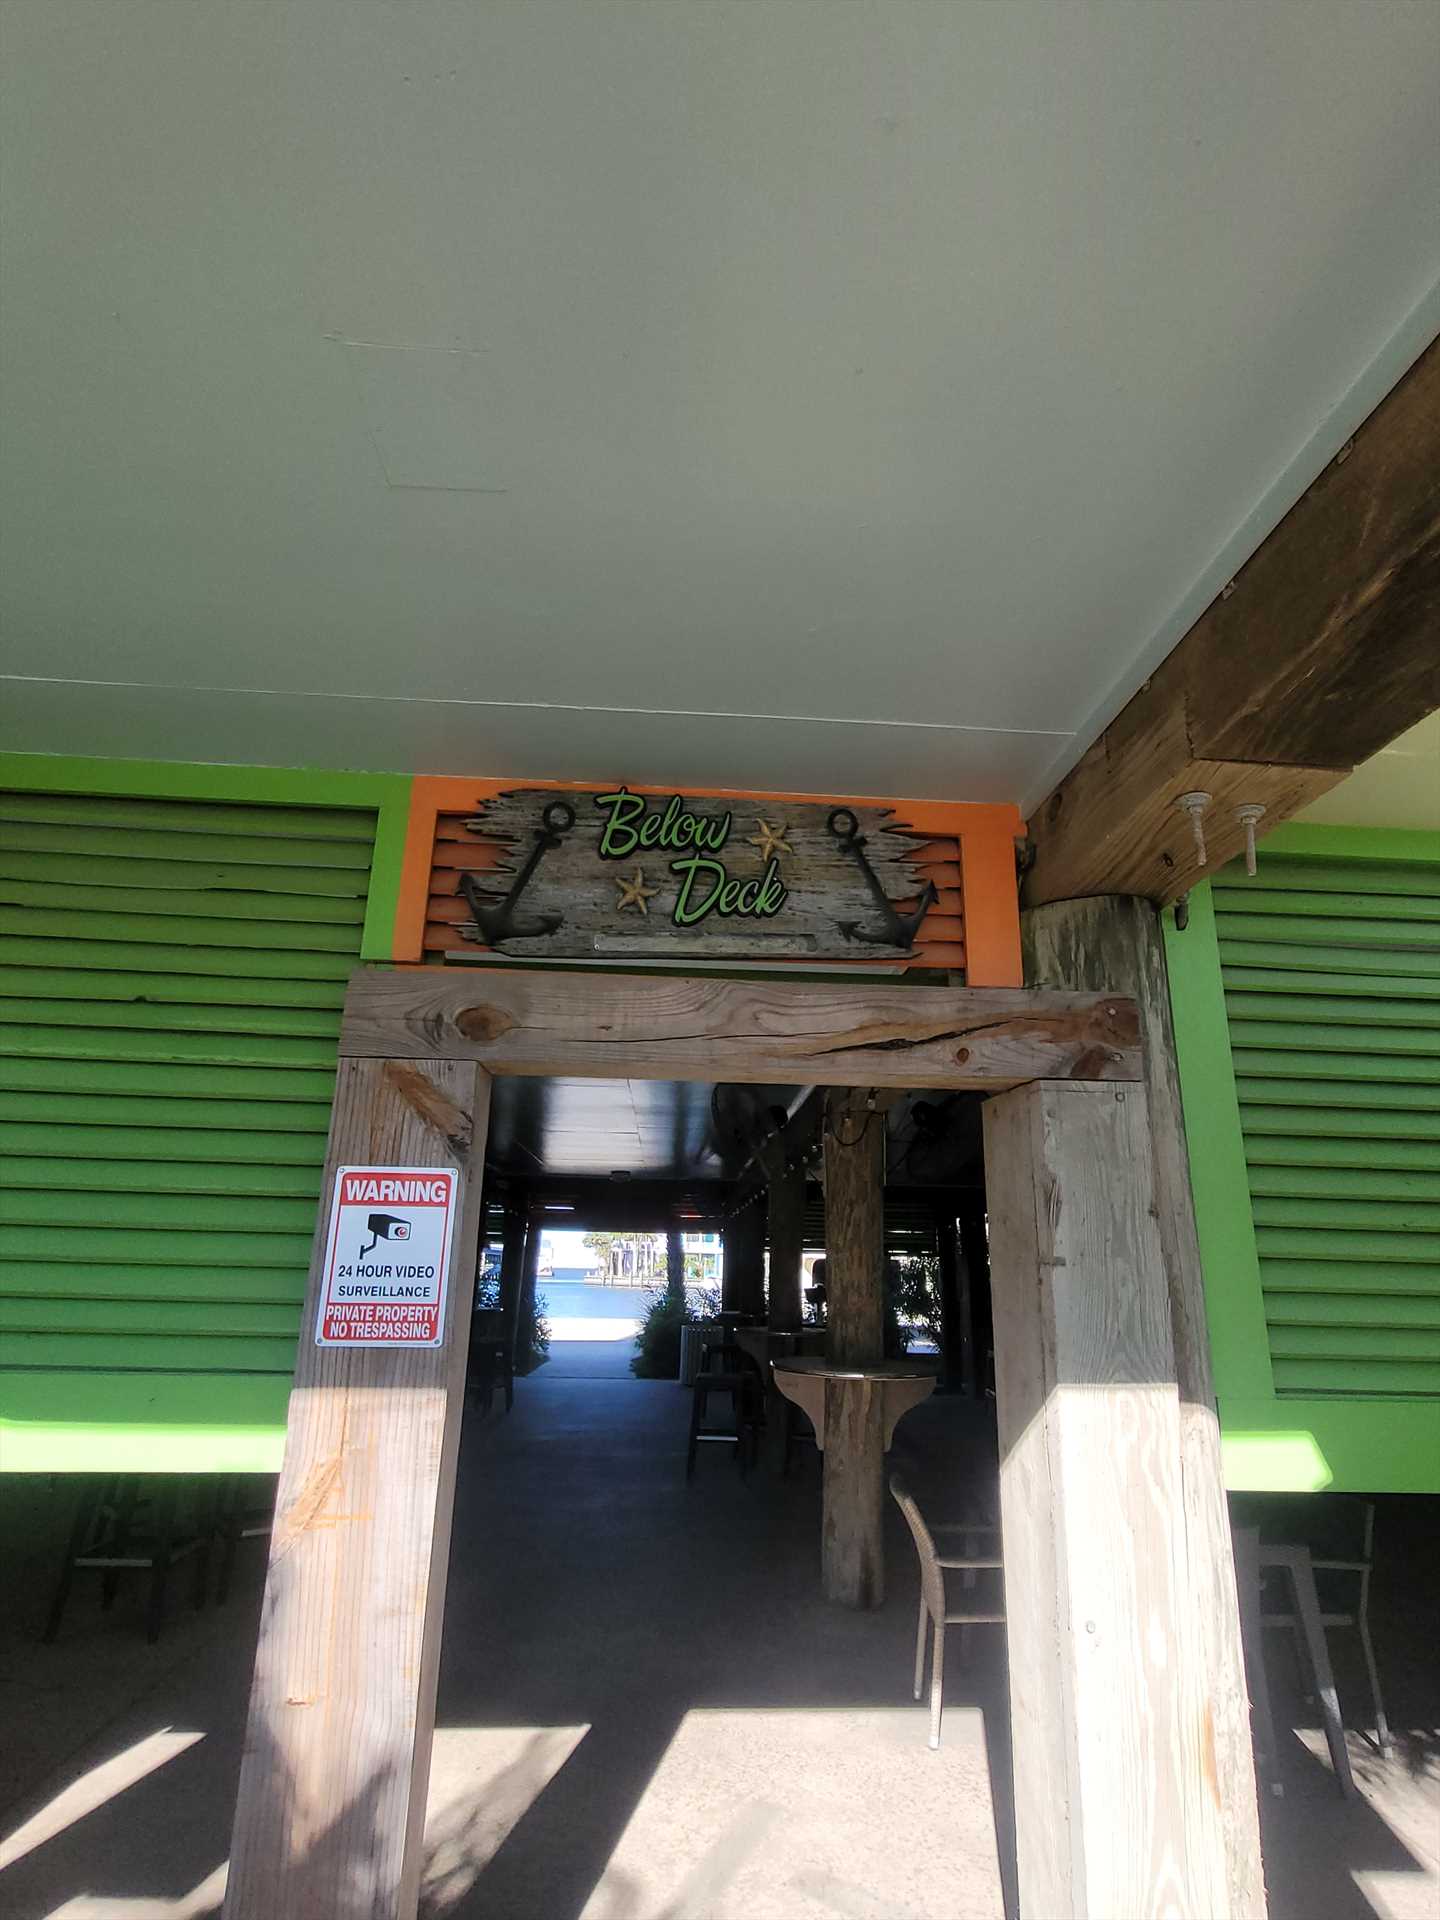 Street entrance for below deck bar